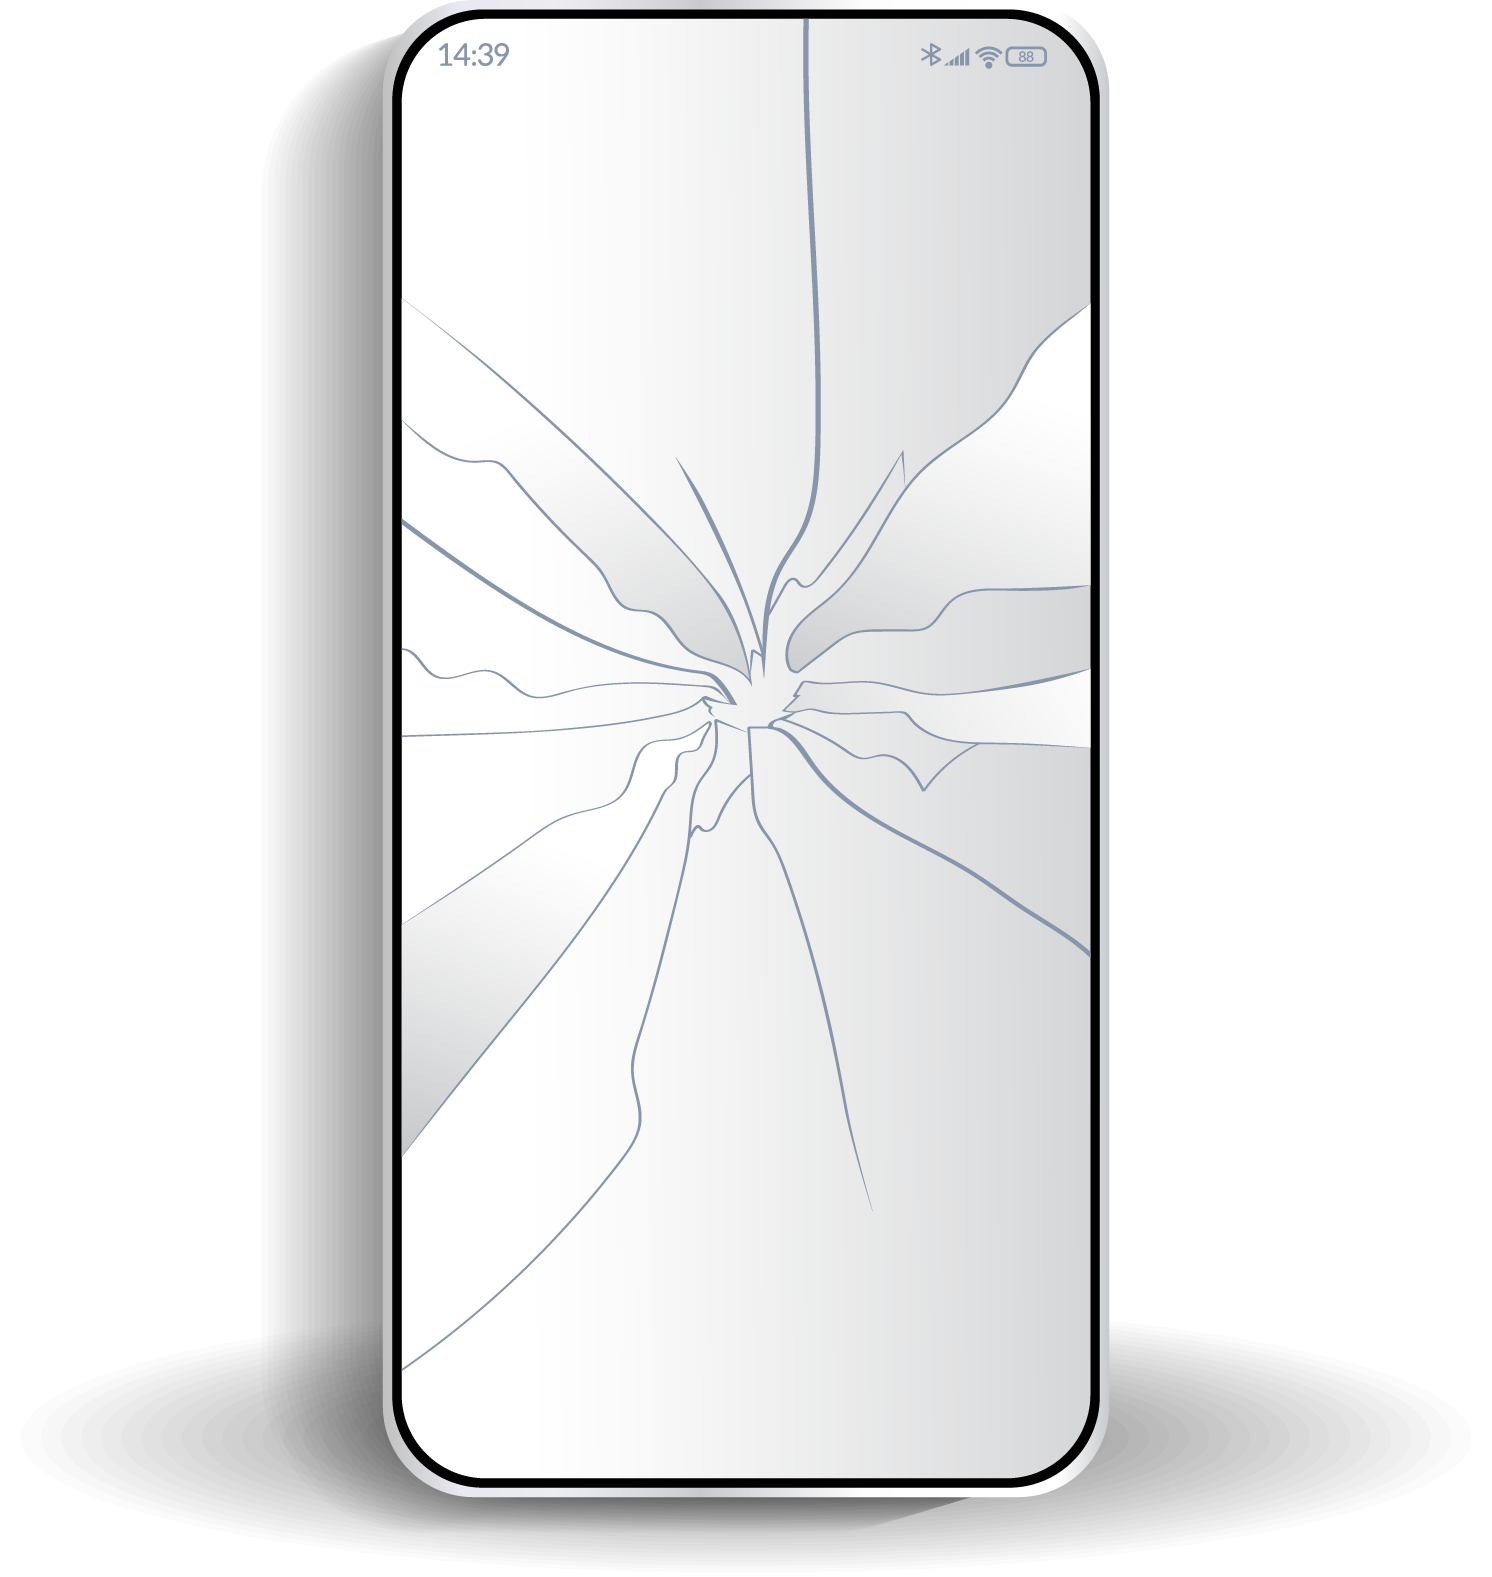 iPhone 11 pro max crecked Screen repair.